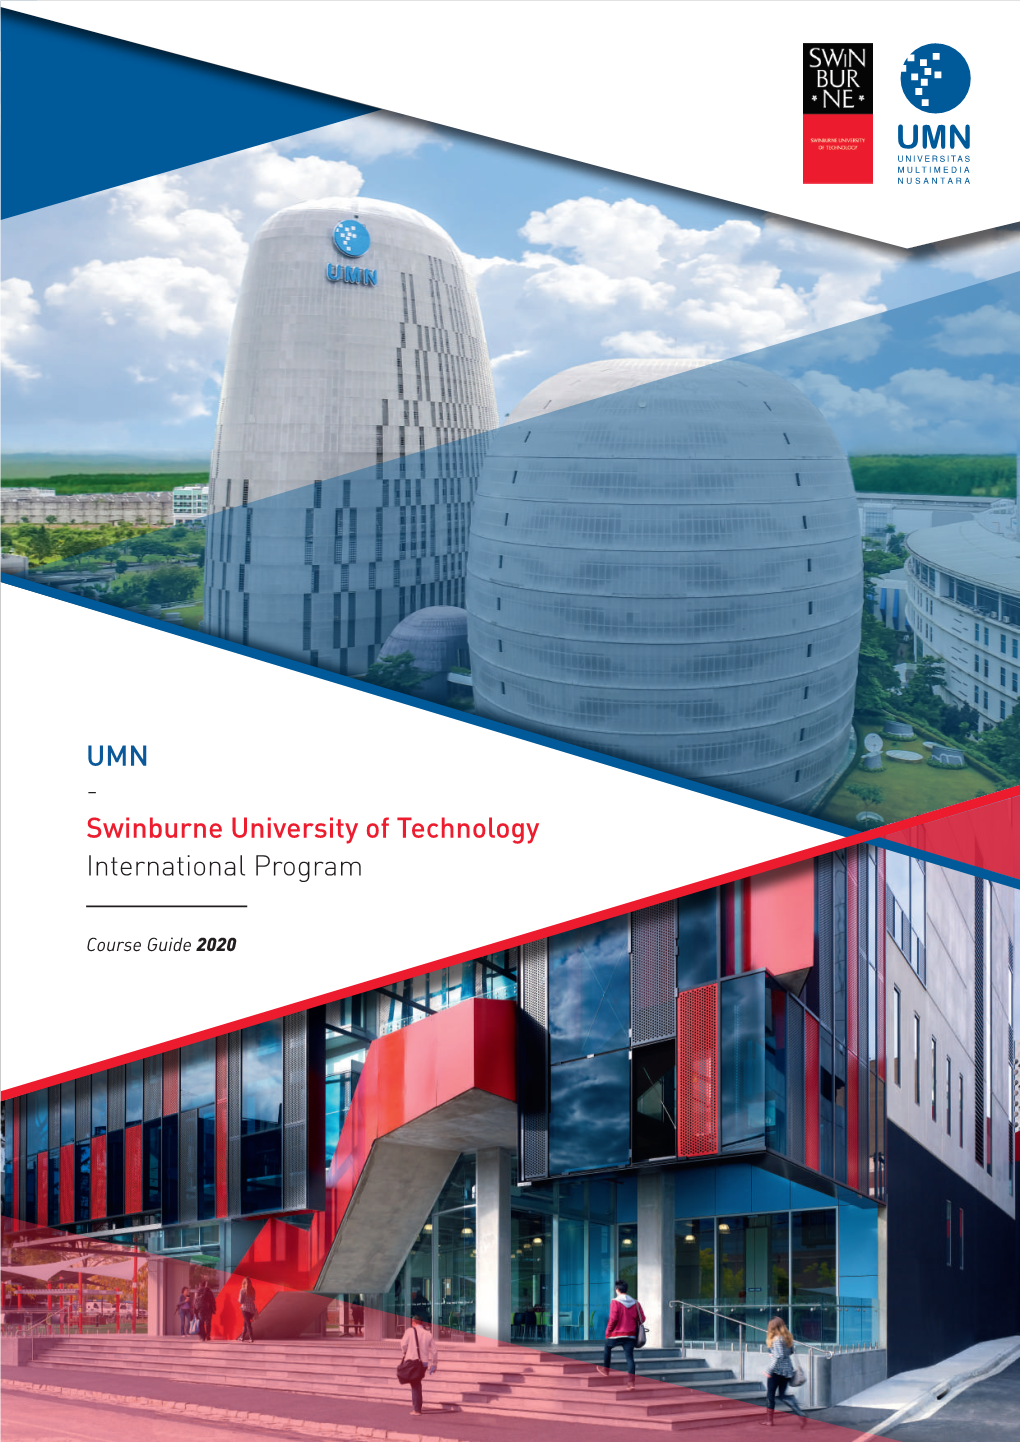 UMN - Swinburne University of Technology International Program